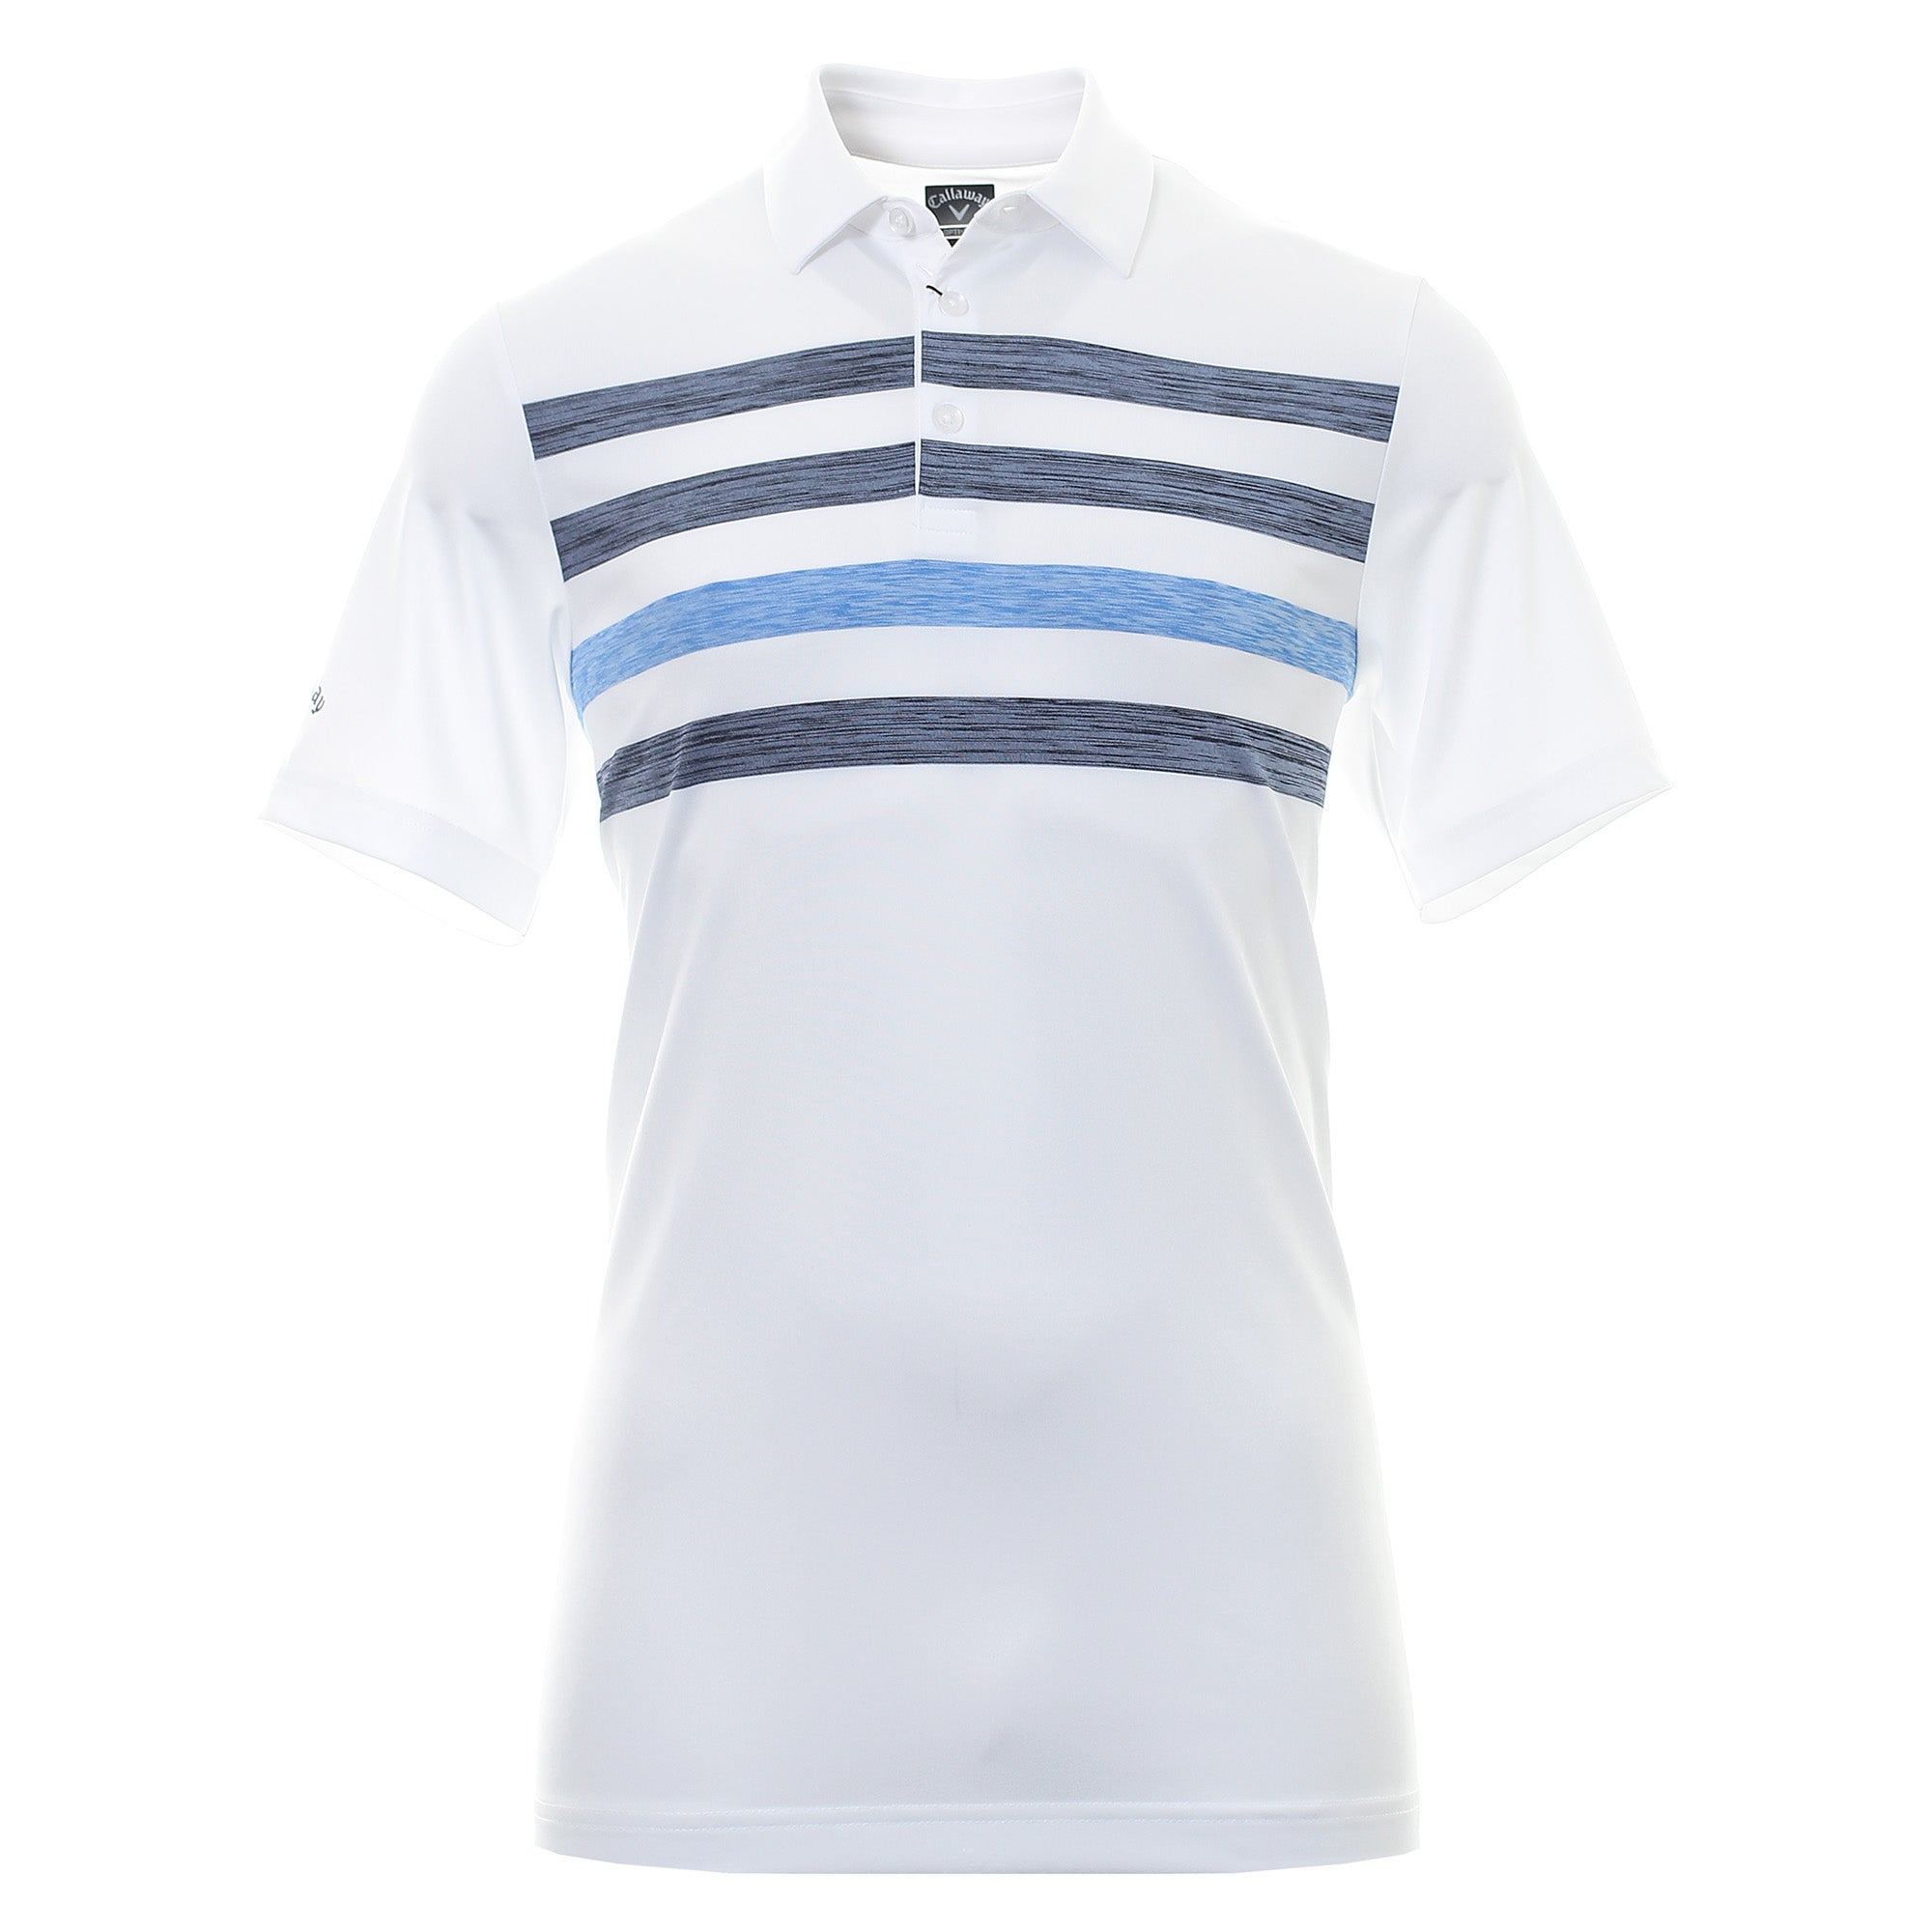 Callaway Golf Ventilated Chest Stripe Shirt CGKS80B6 Bright White 100 ...